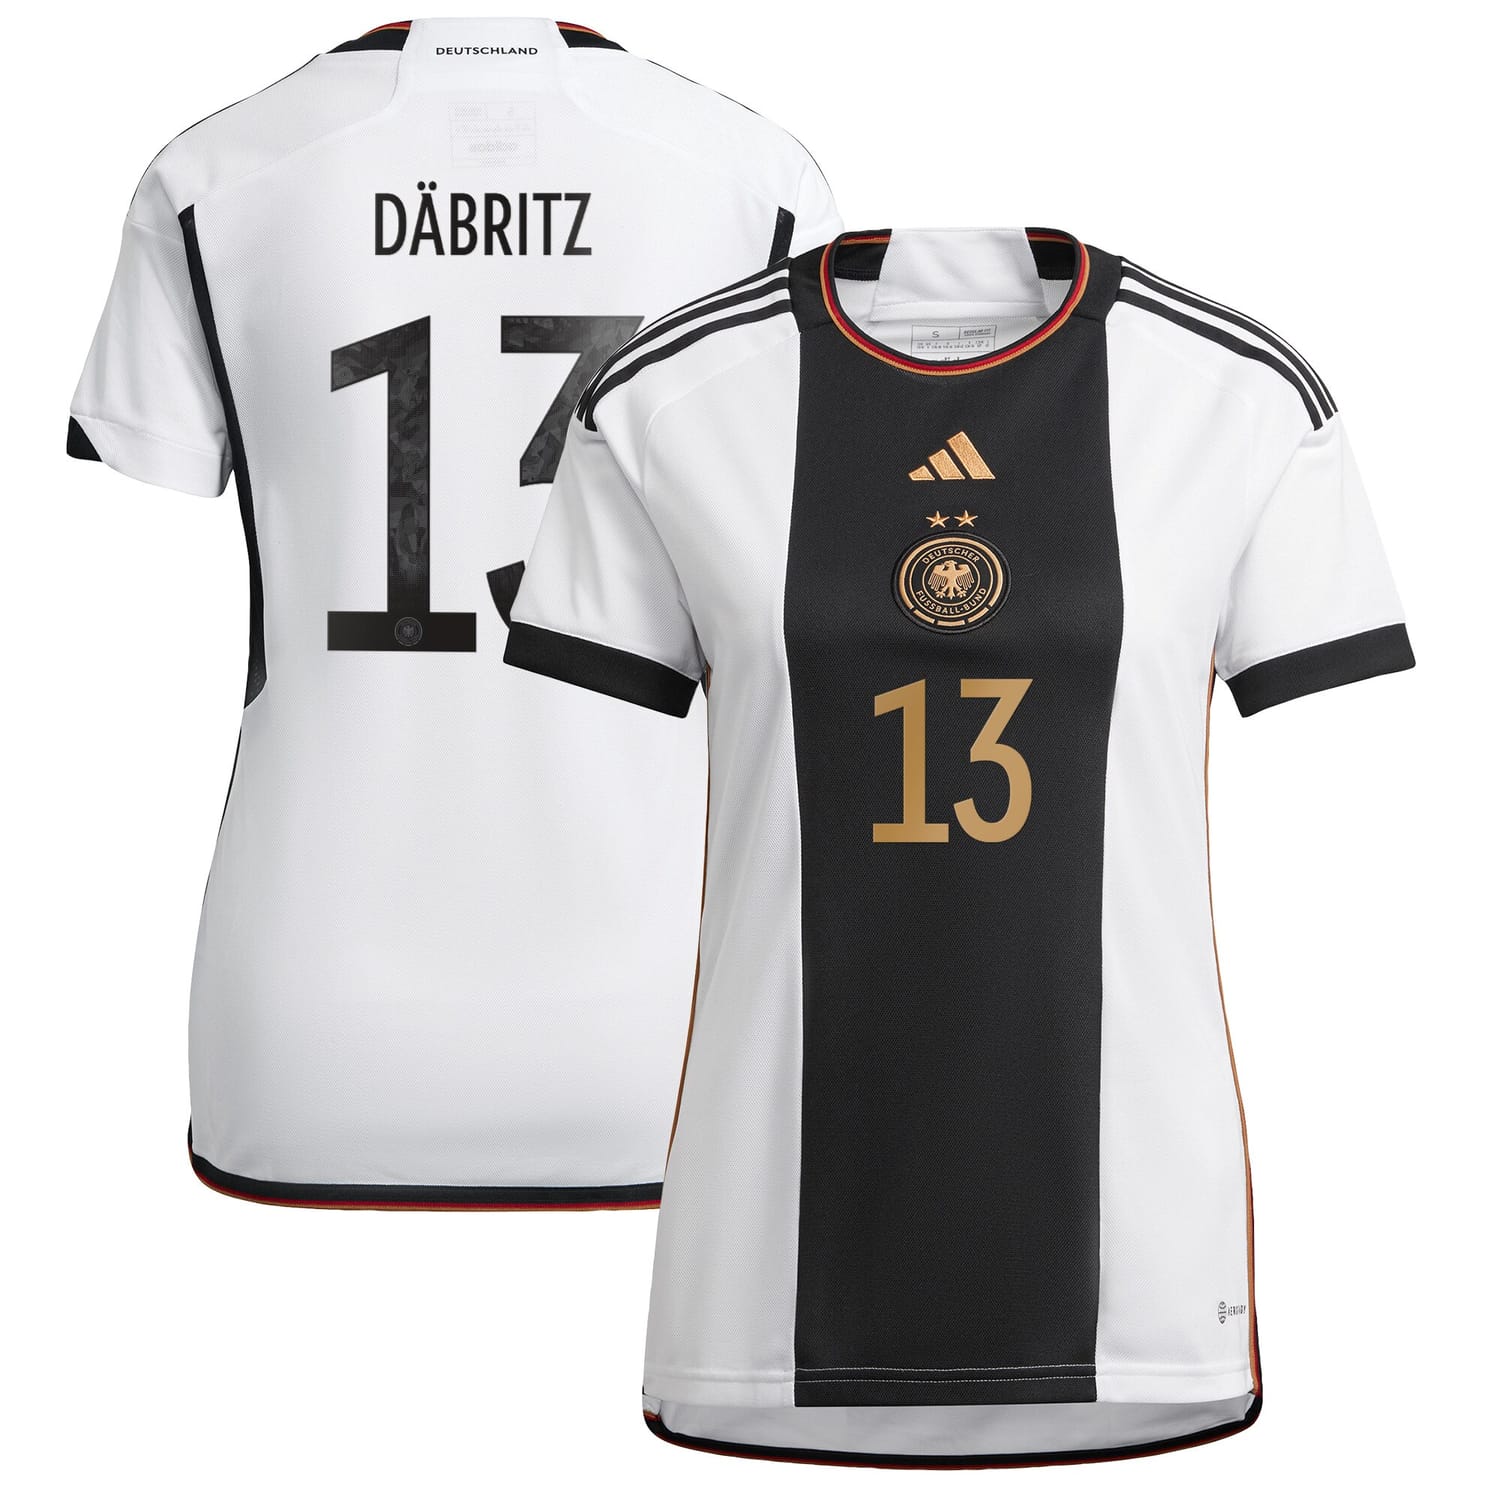 Germany National Team Home Jersey Shirt player Sara Däbritz 13 printing for Women